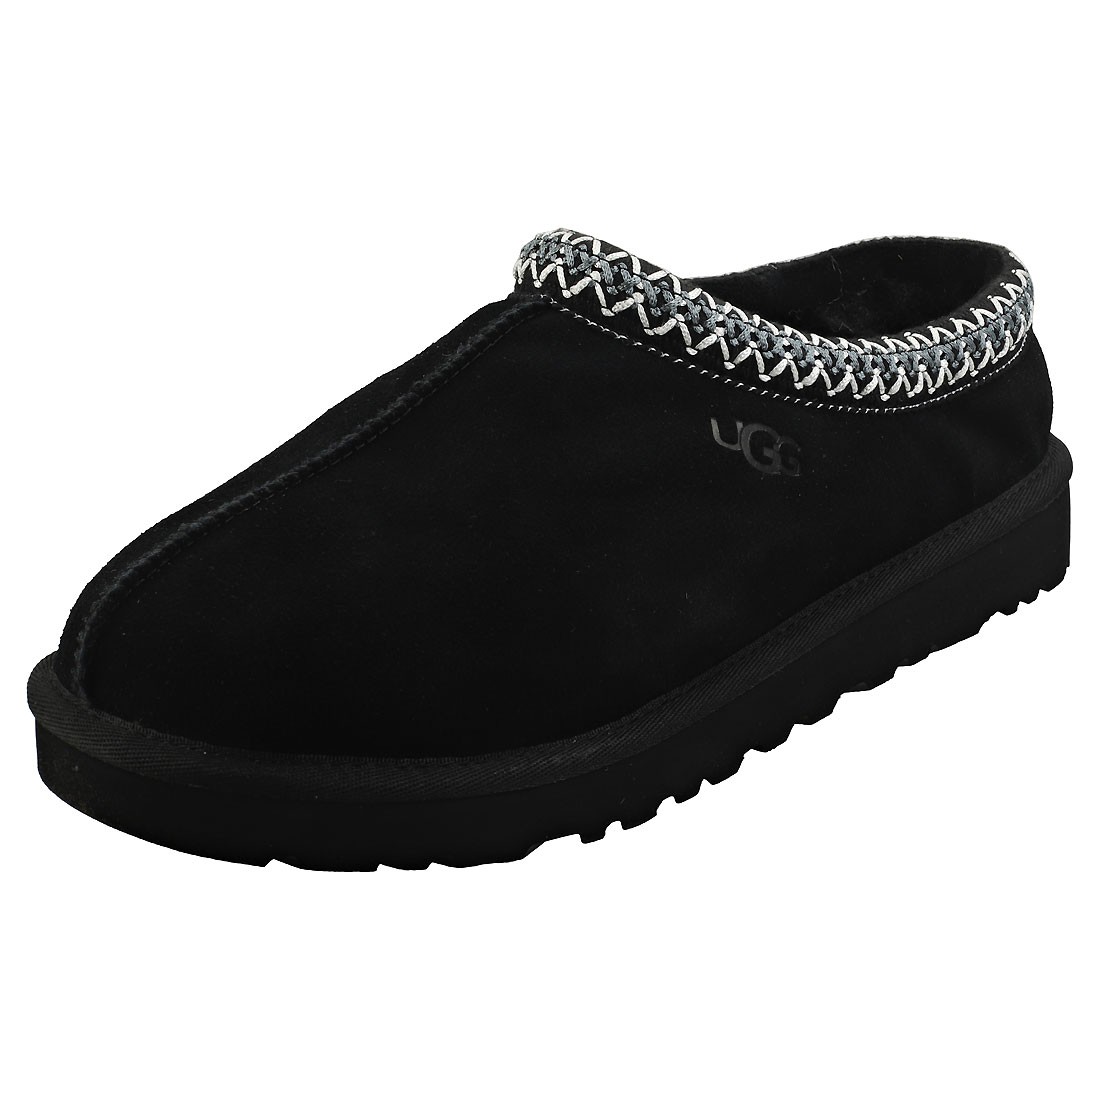 UGG Tasman Mens Black Slip On Shoes - 8 UK | eBay